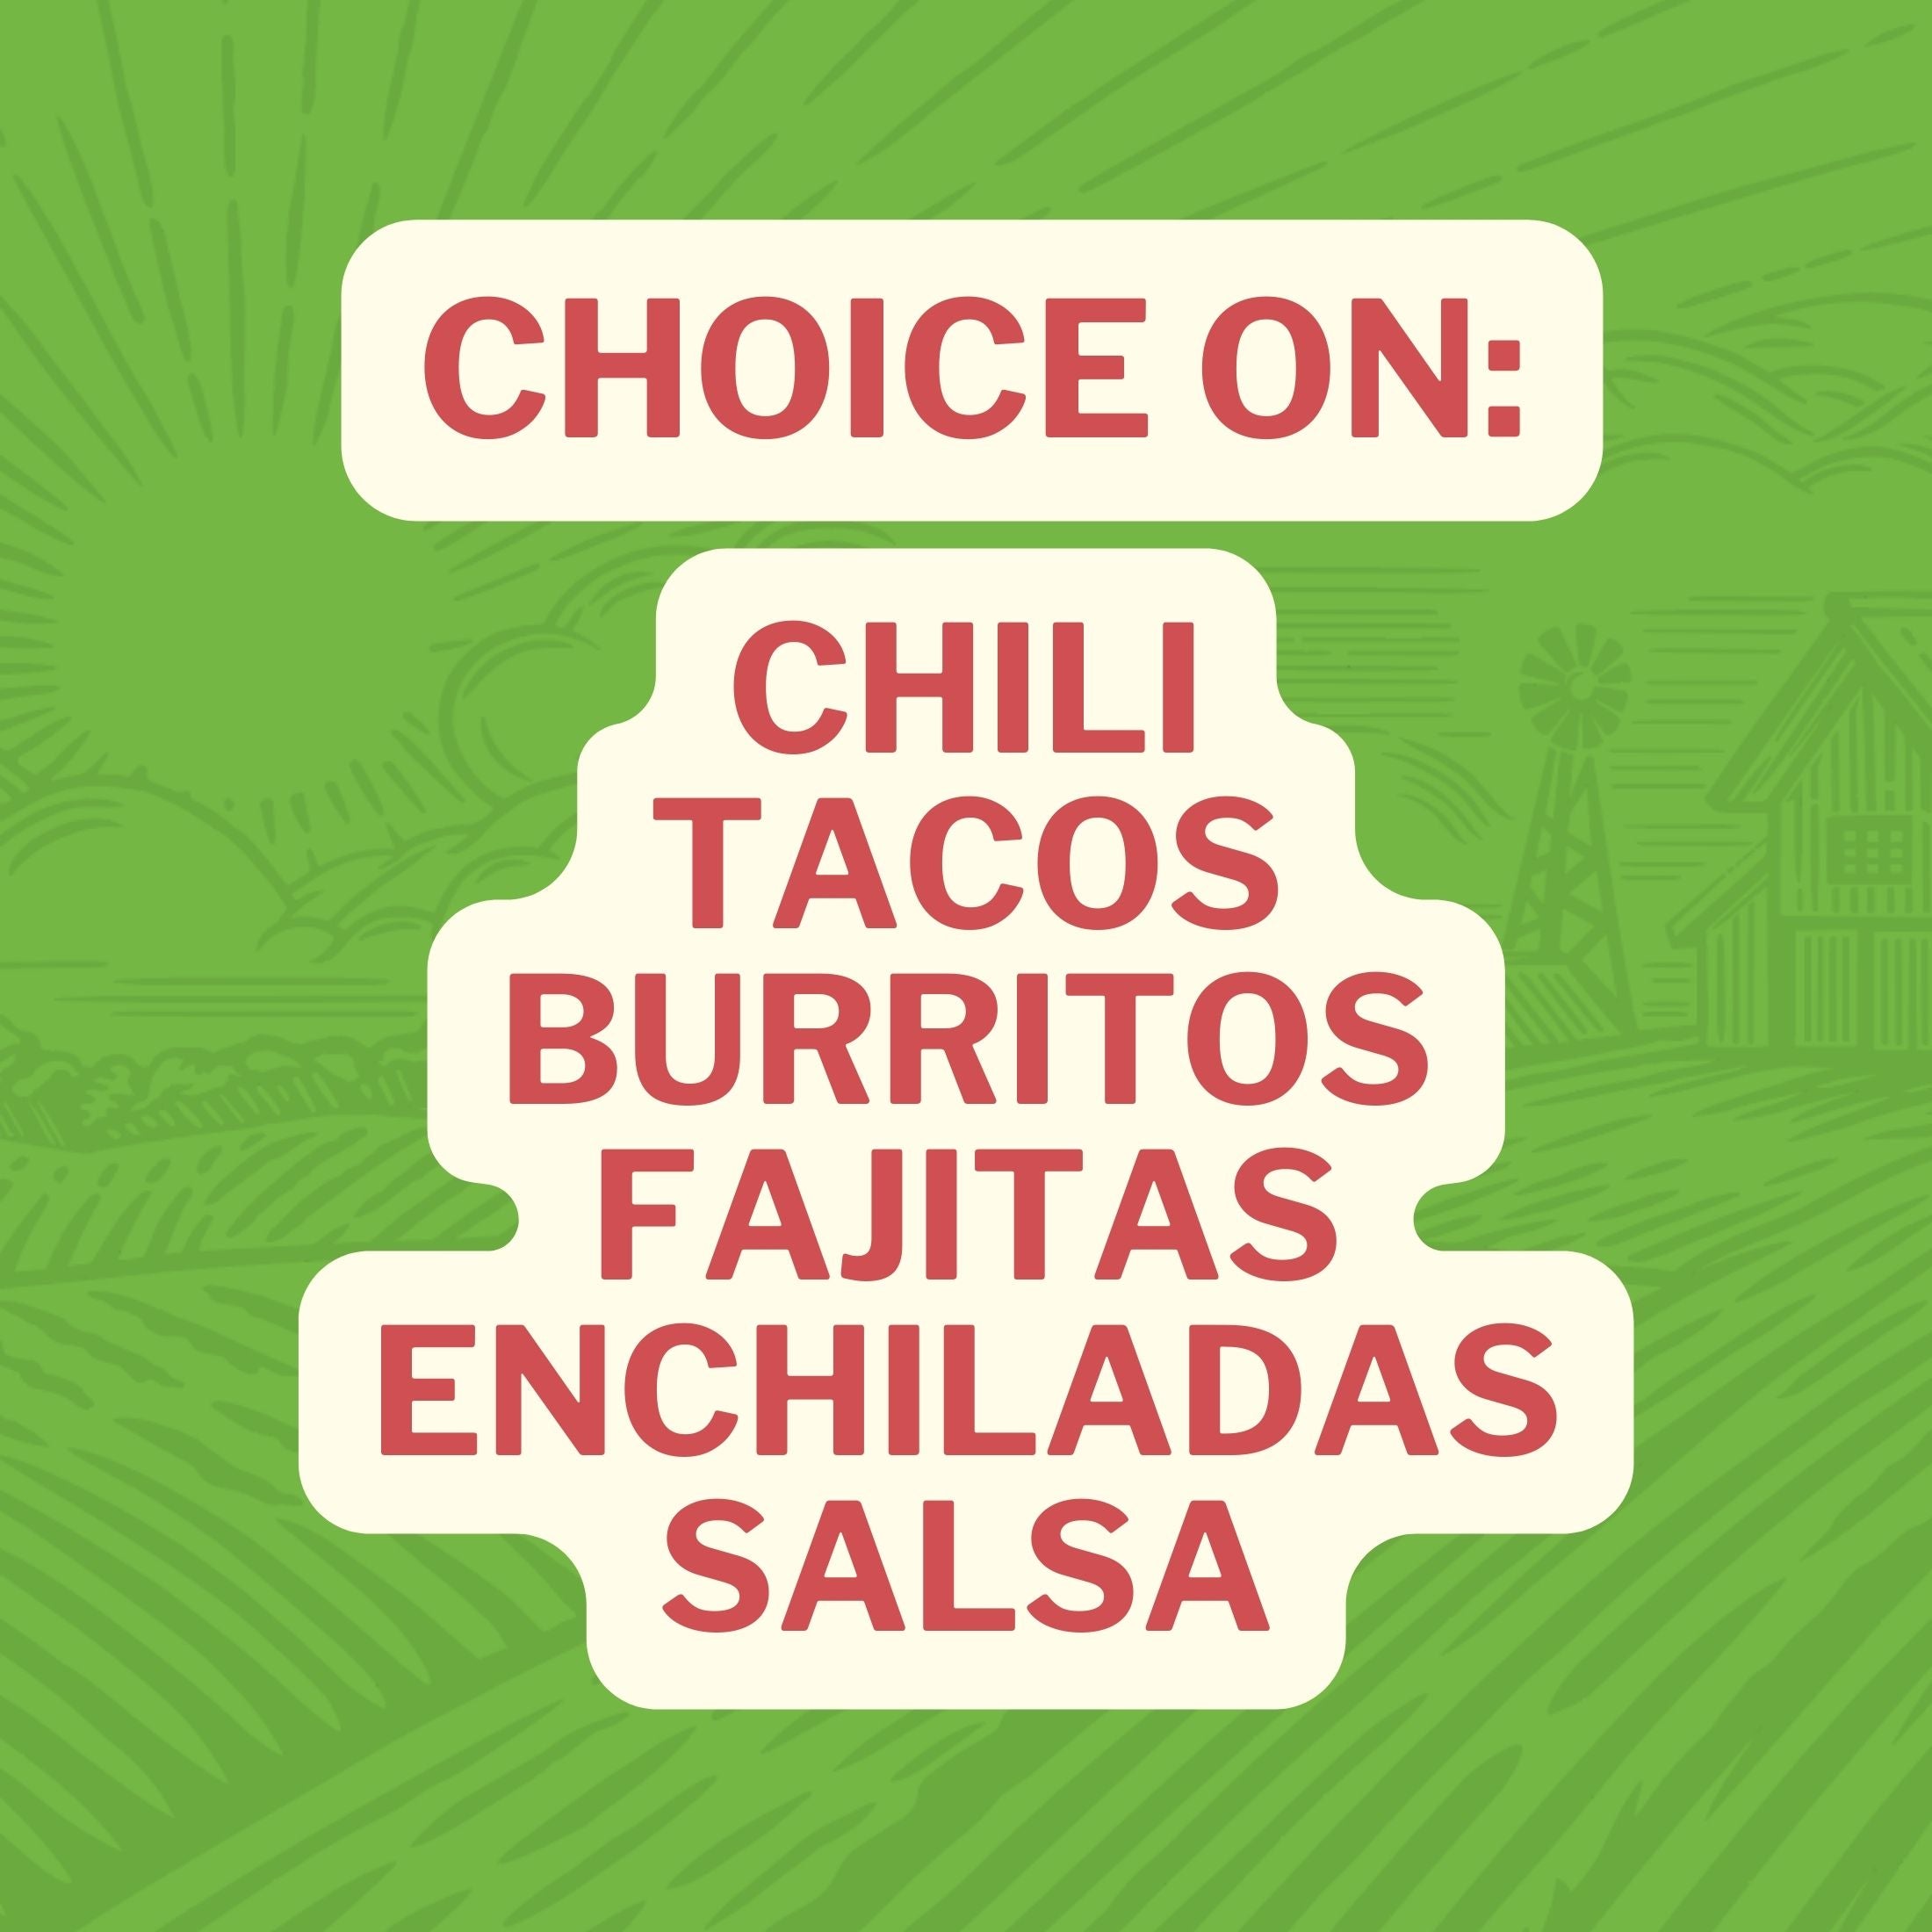 Choice On: Chili Tacos Burritos Fajitas Enchiladas Salsa